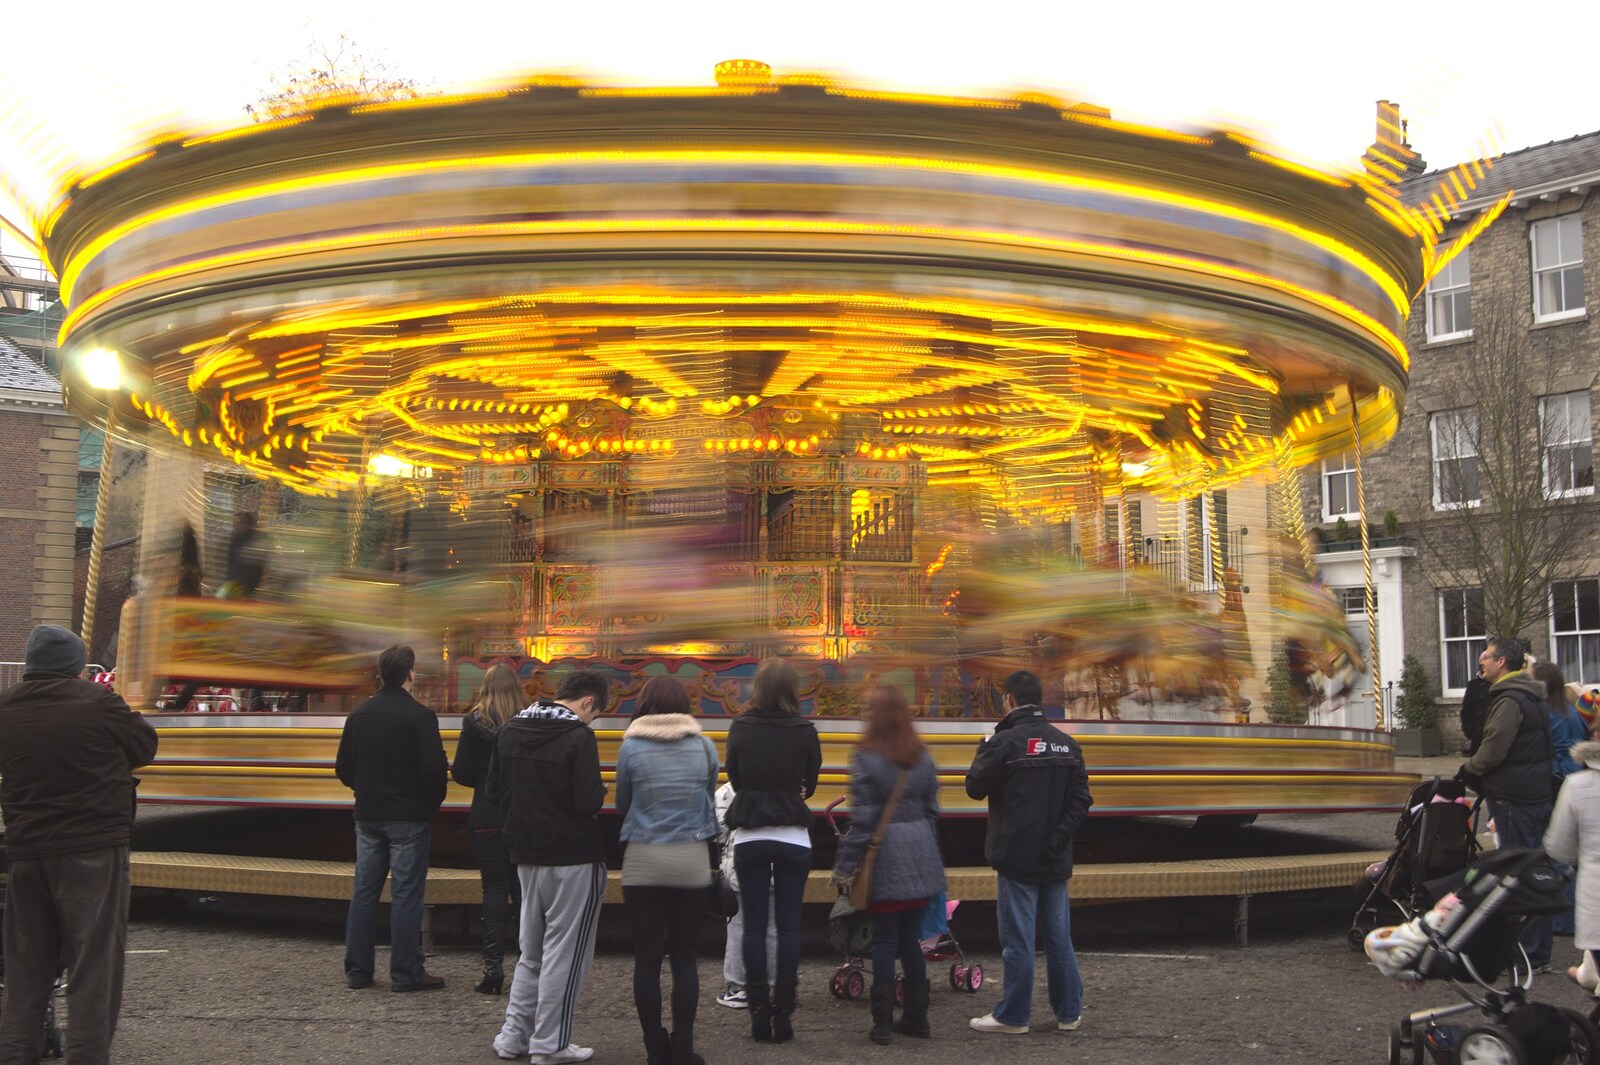 A Christmas Fair, Bury St. Edmunds, Suffolk - 28th November 2010: A carousel whirls about